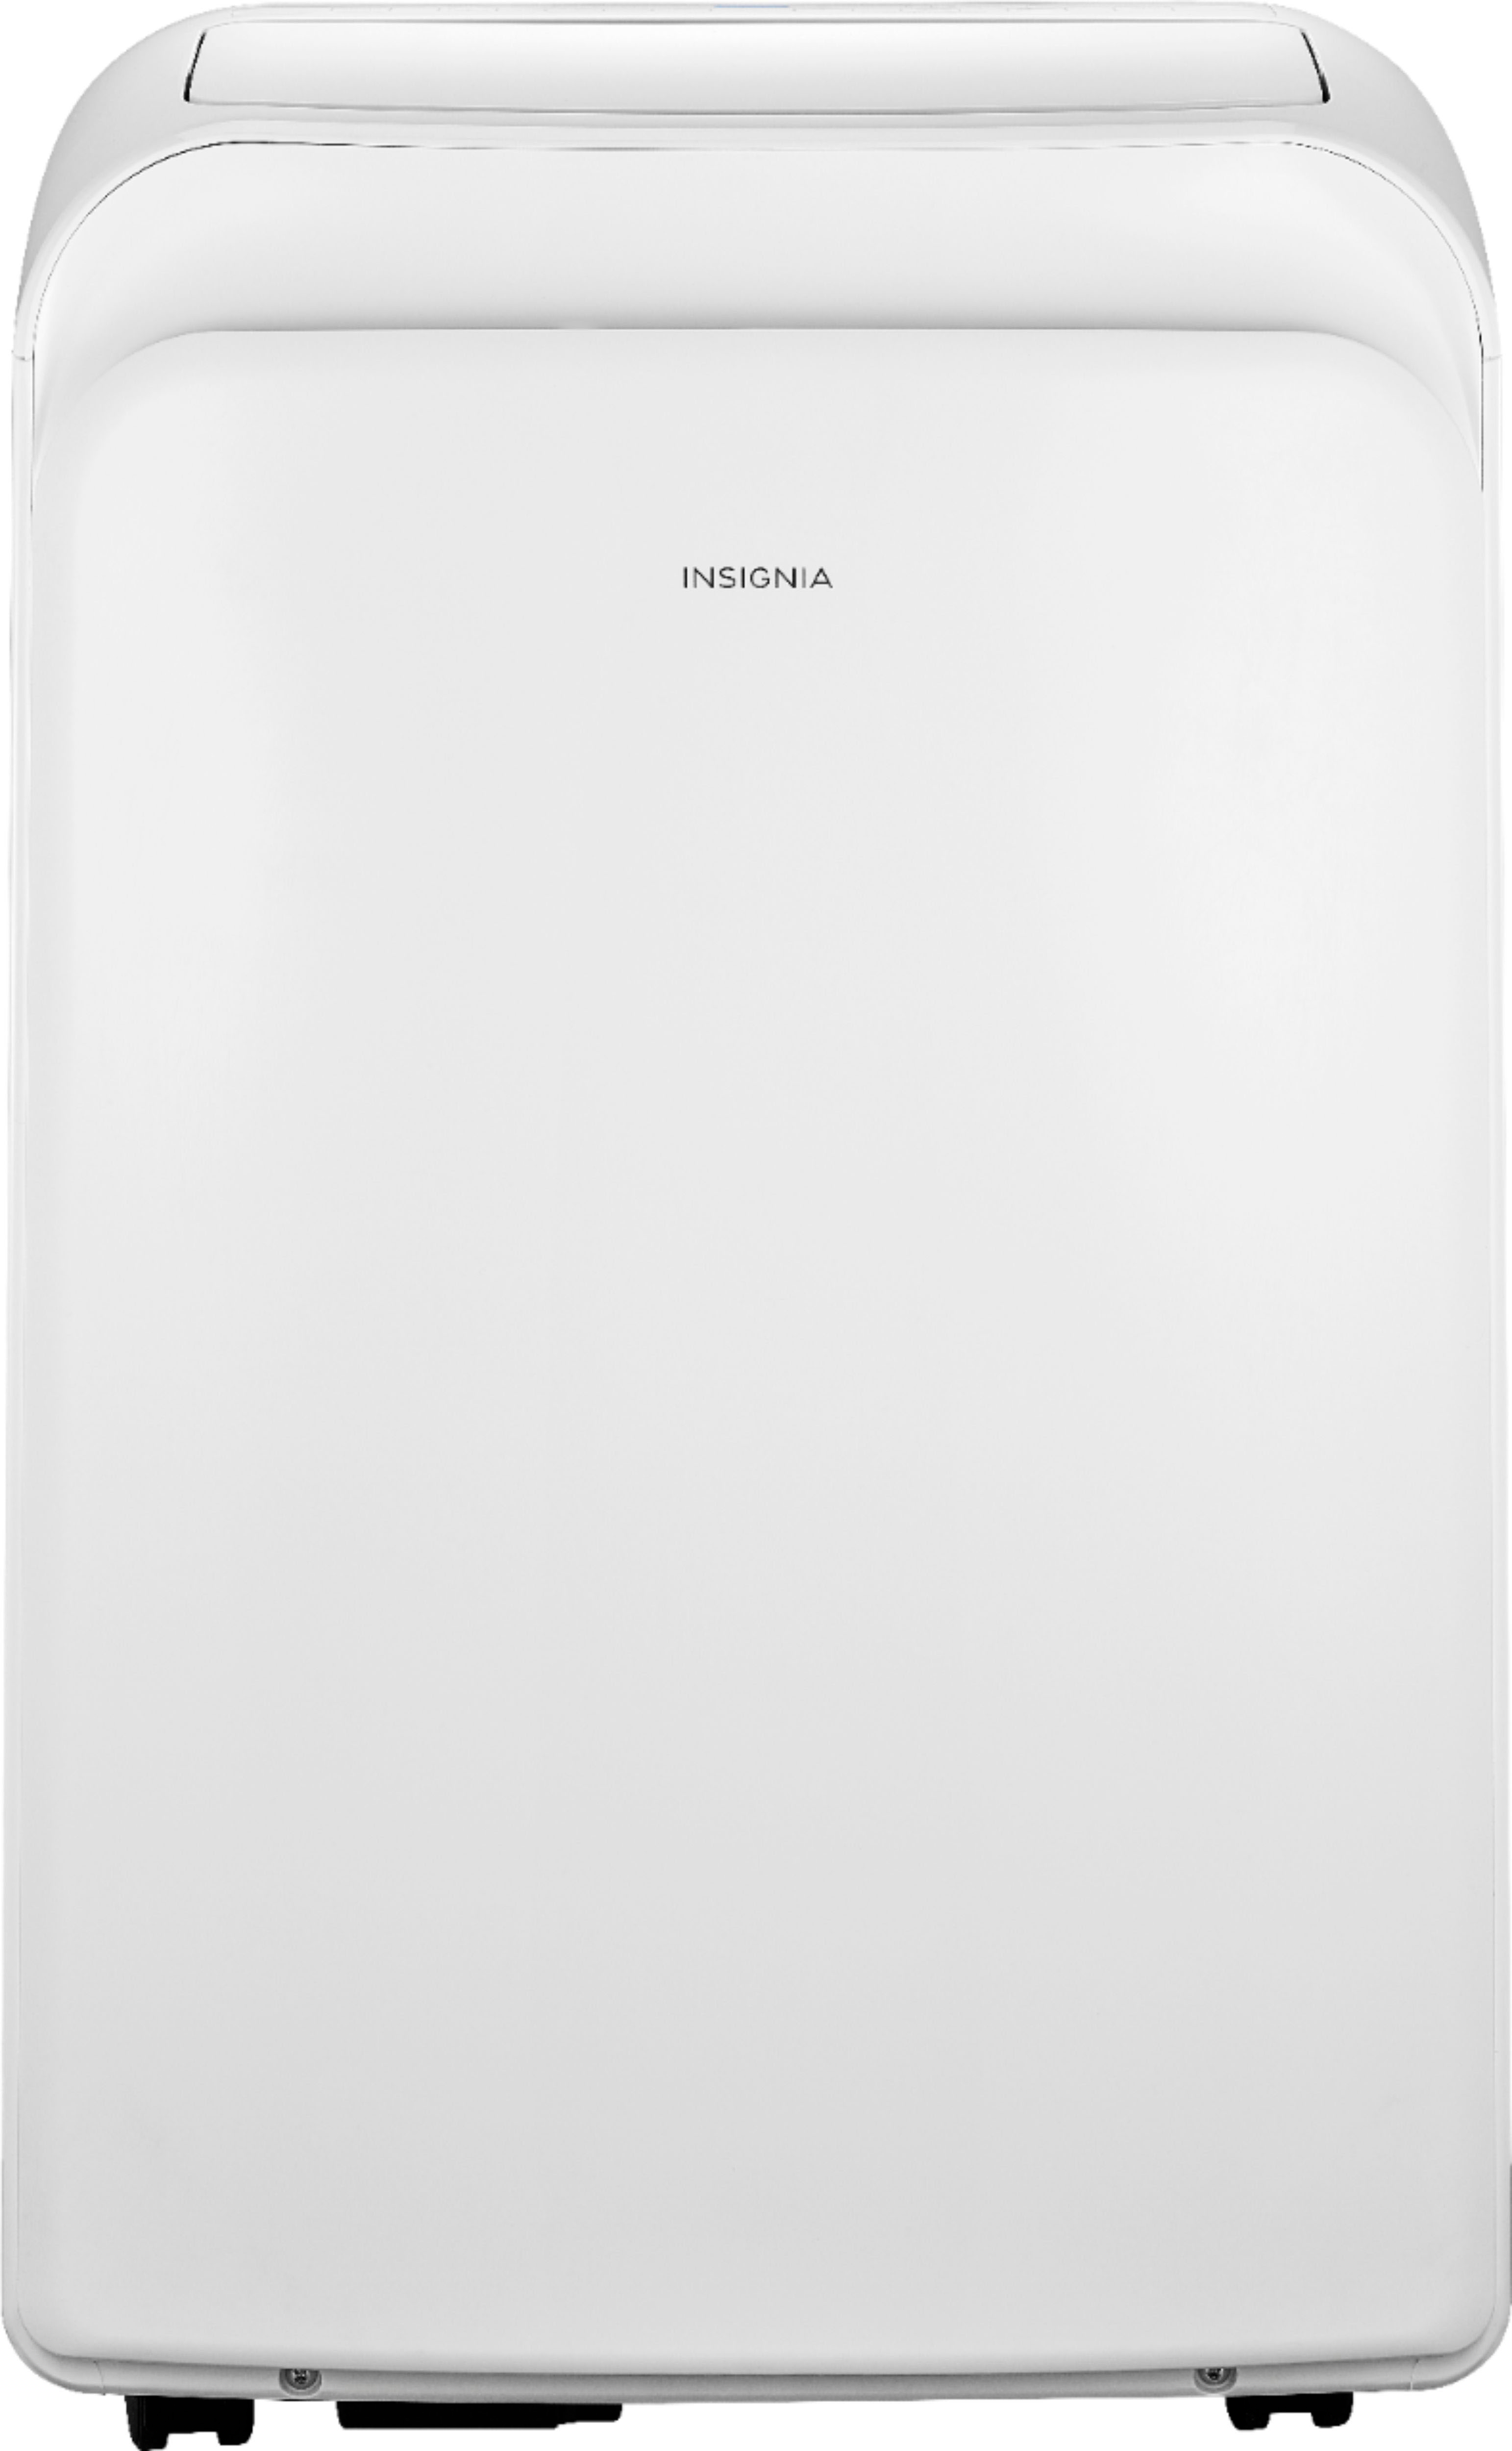 Insignia - 300 Sq. ft. Portable Air Conditioner - White